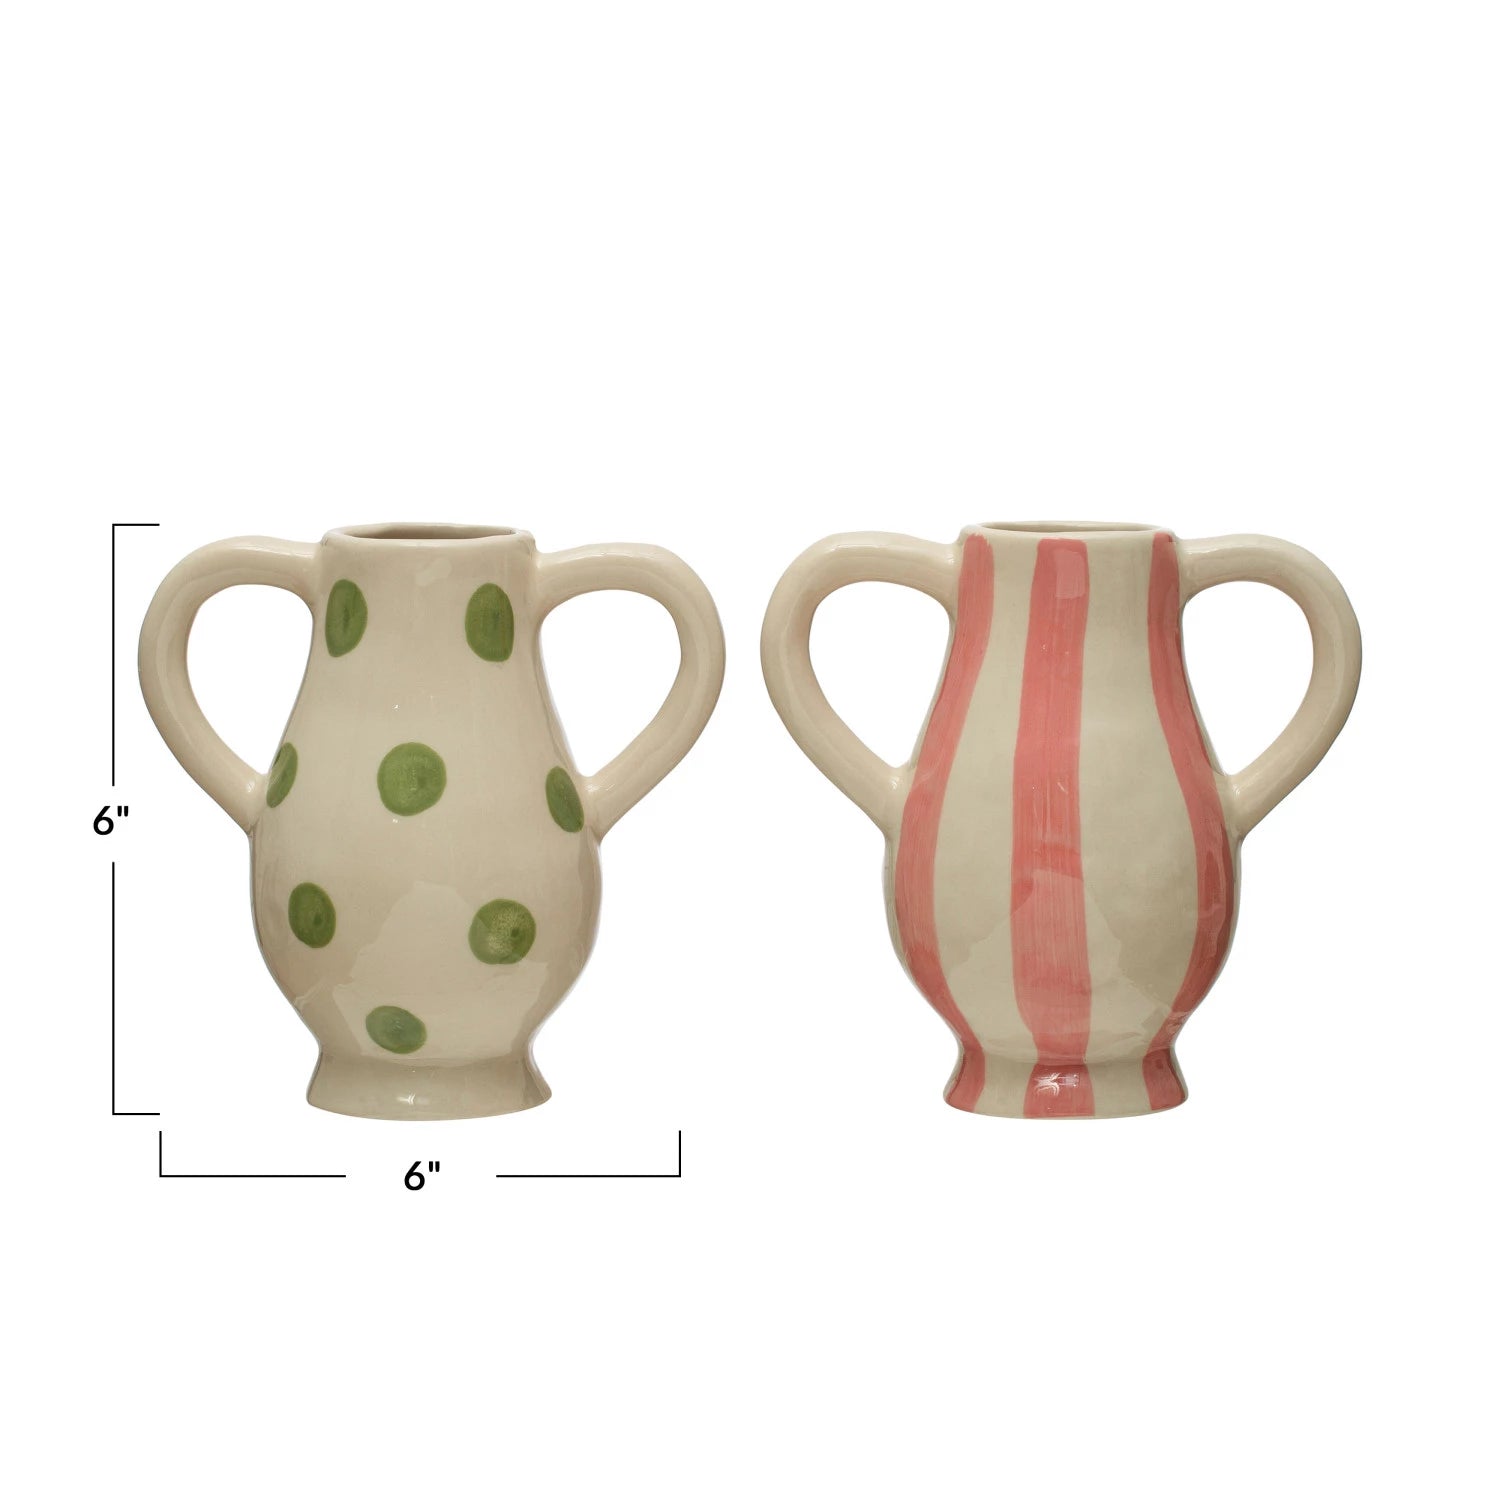 Hand-Painted Stoneware Vase w/ Handles, 2 Styles